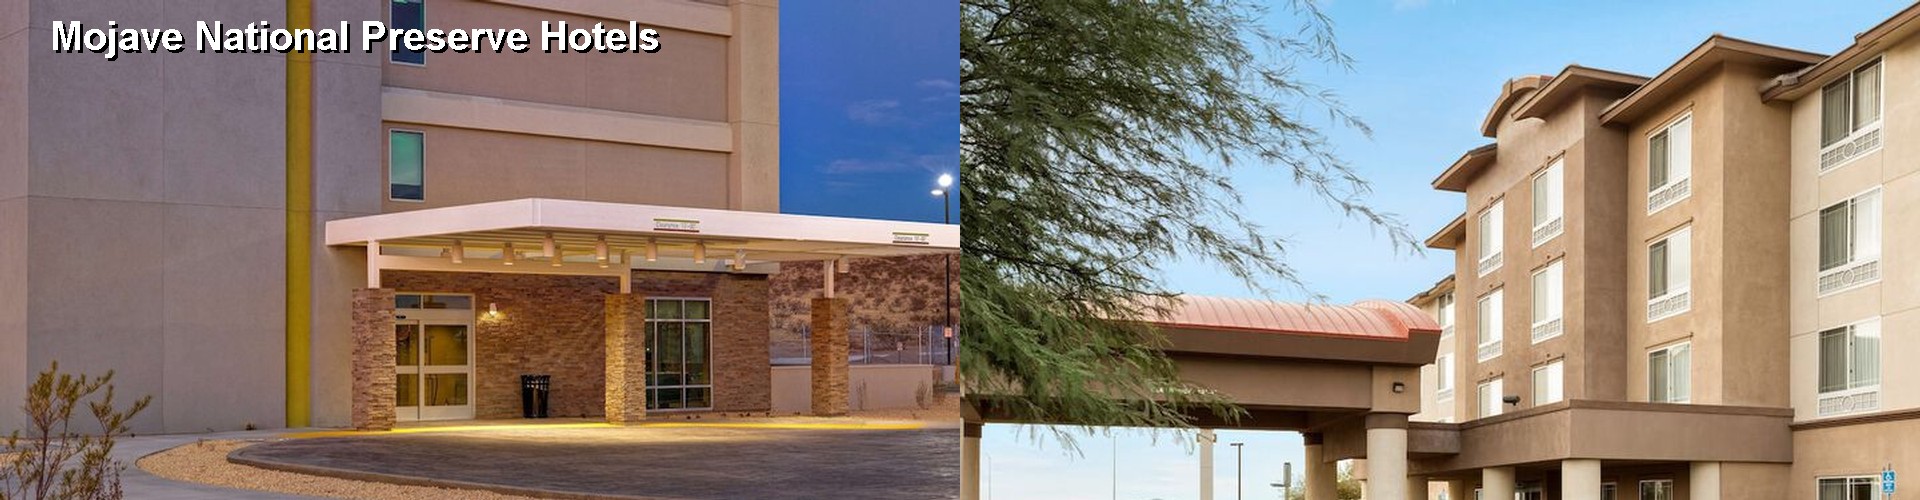 3 Best Hotels near Mojave National Preserve